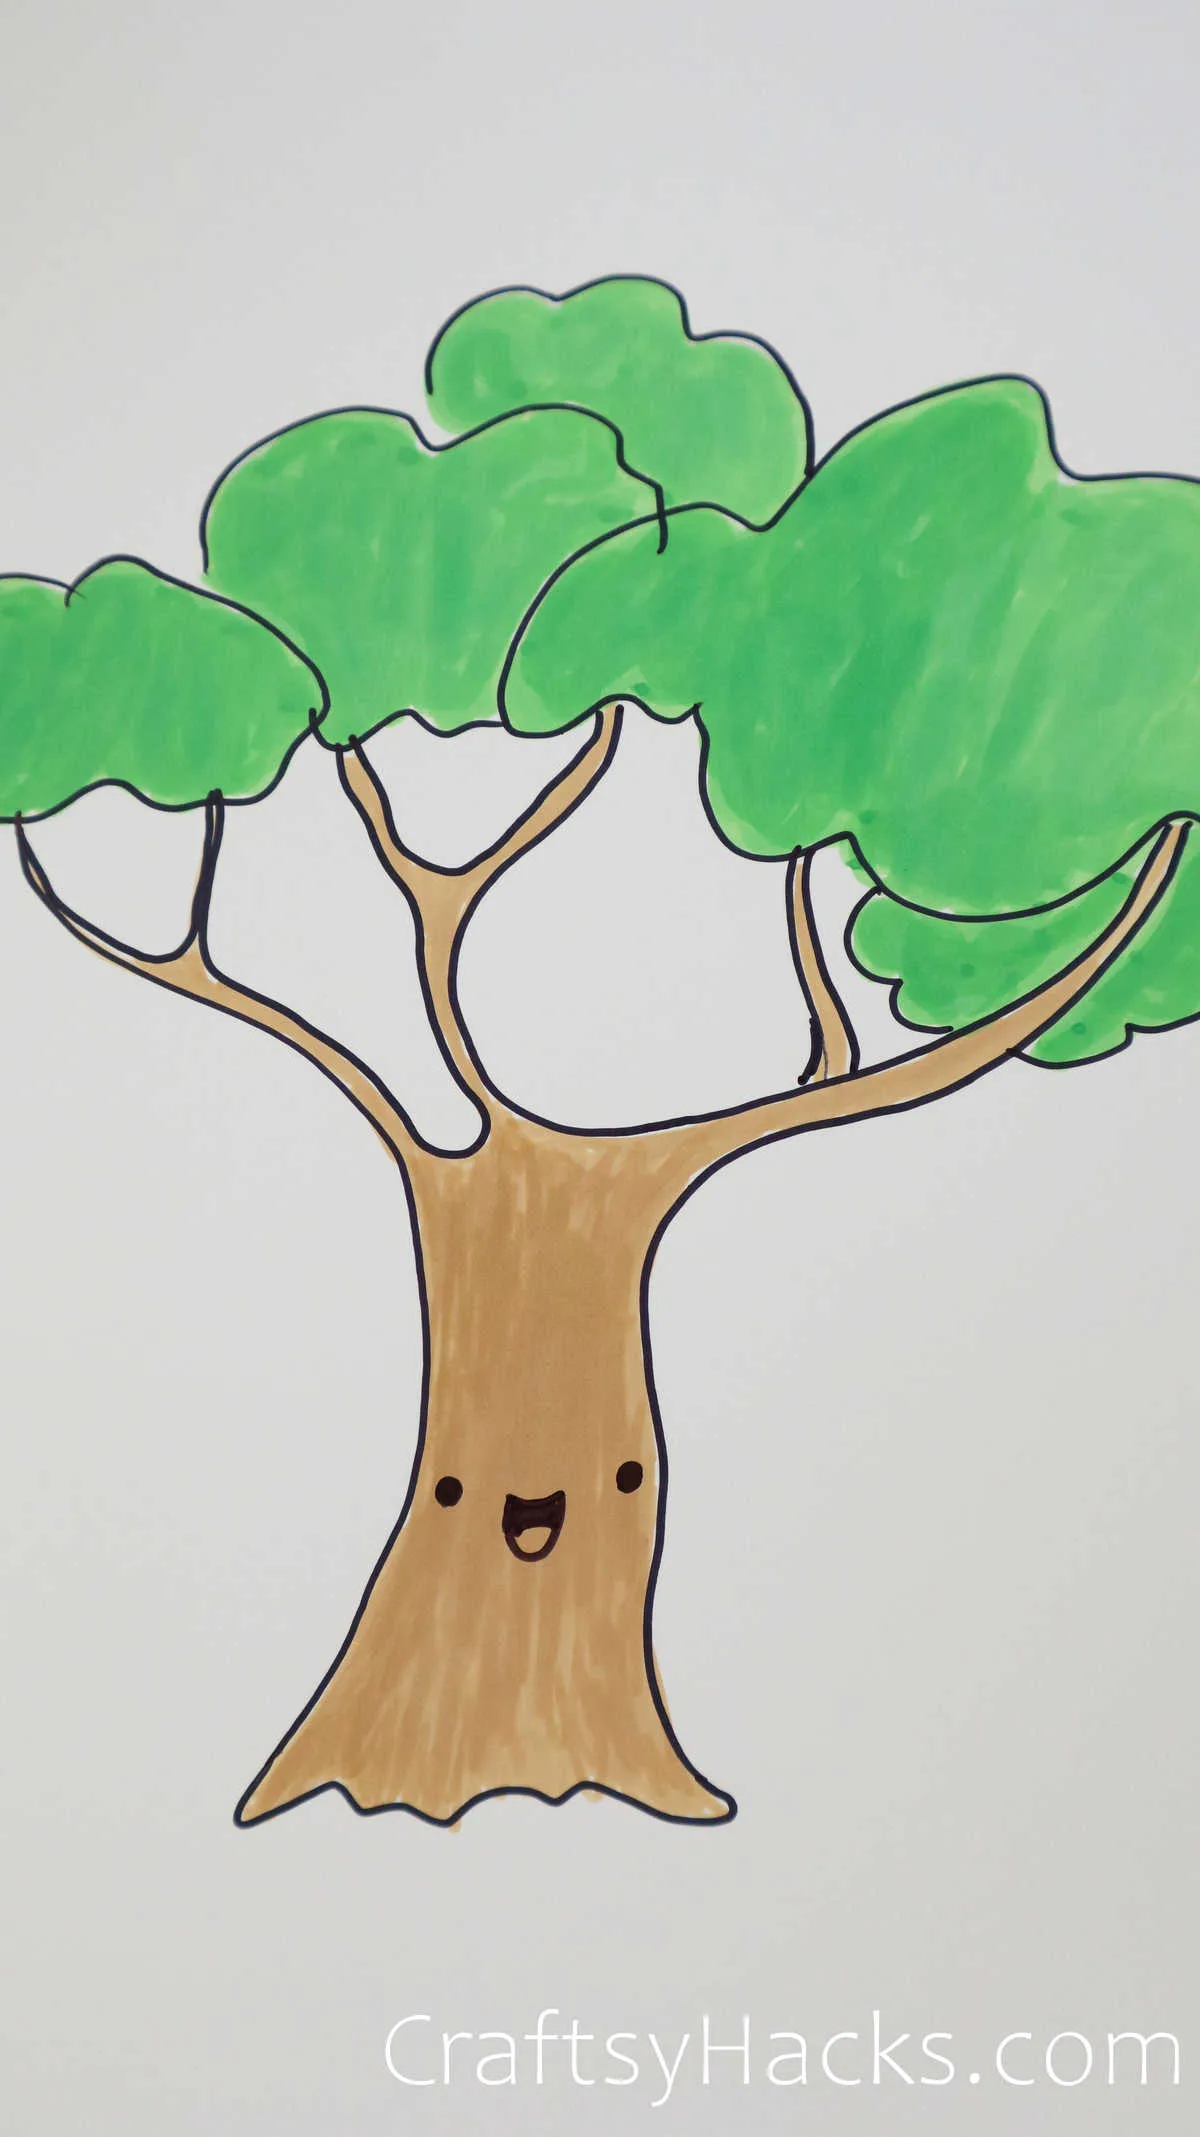 Easy Tree Sketch PNG Transparent Images Free Download | Vector Files |  Pngtree-saigonsouth.com.vn